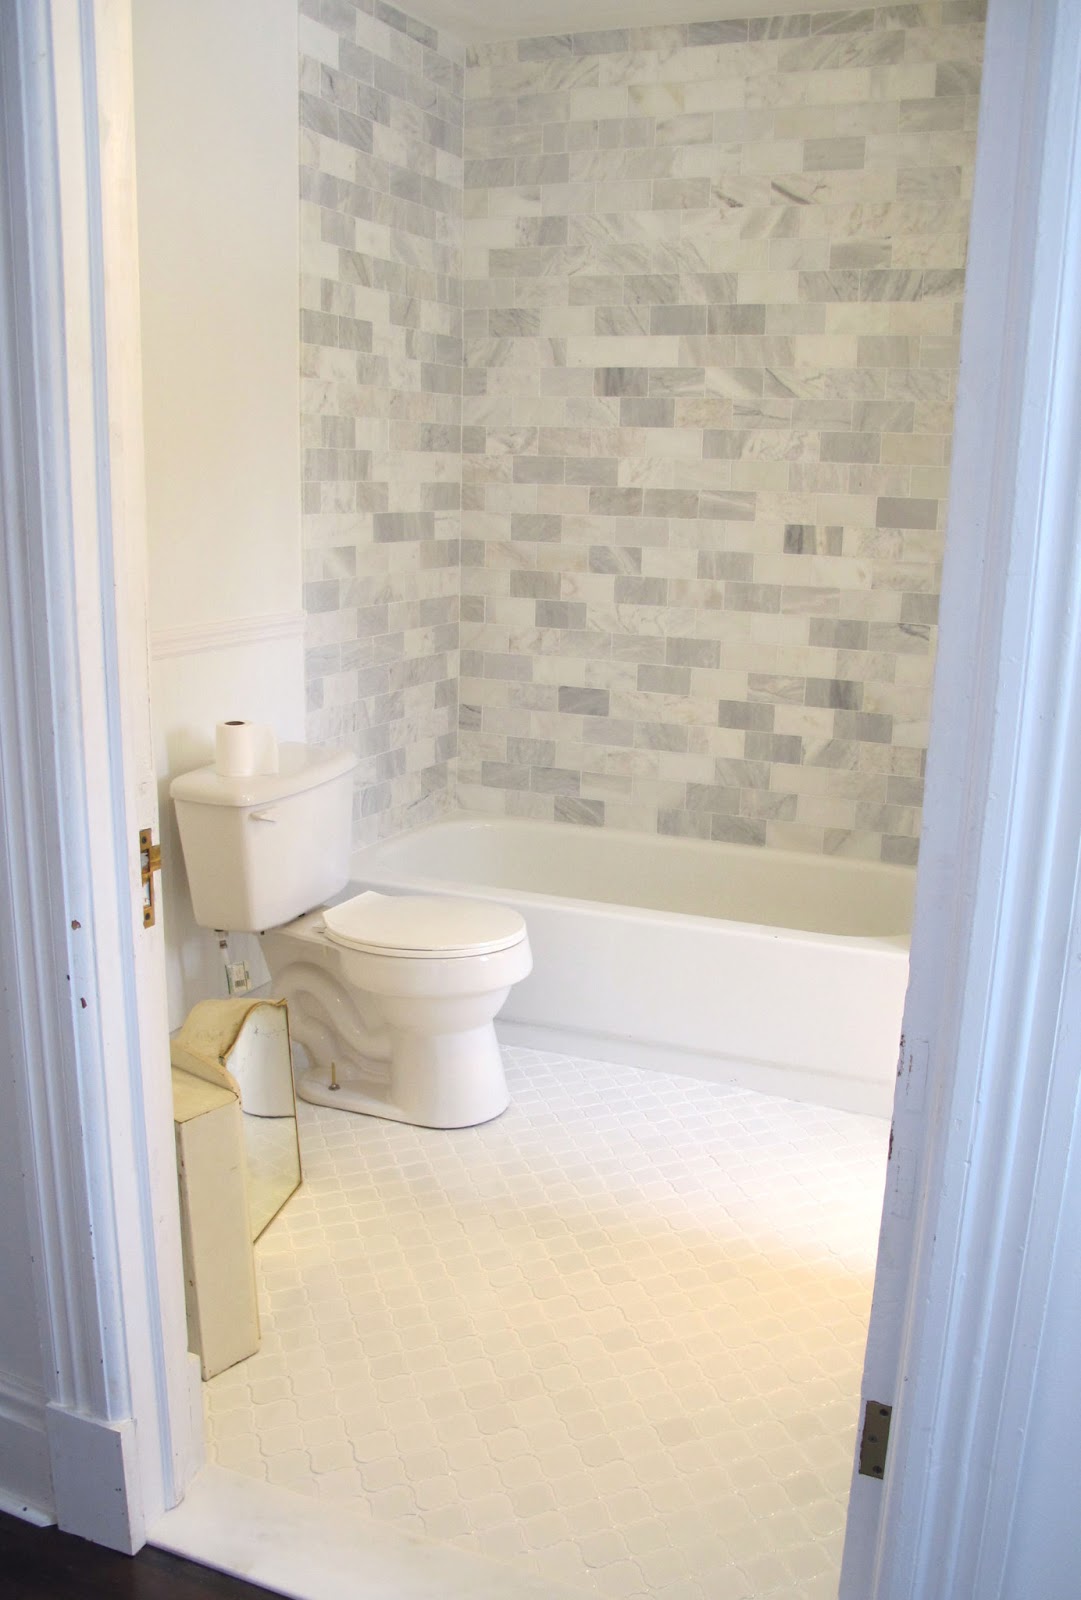 24 ideas to answer is ceramic tile good for bathroom floors